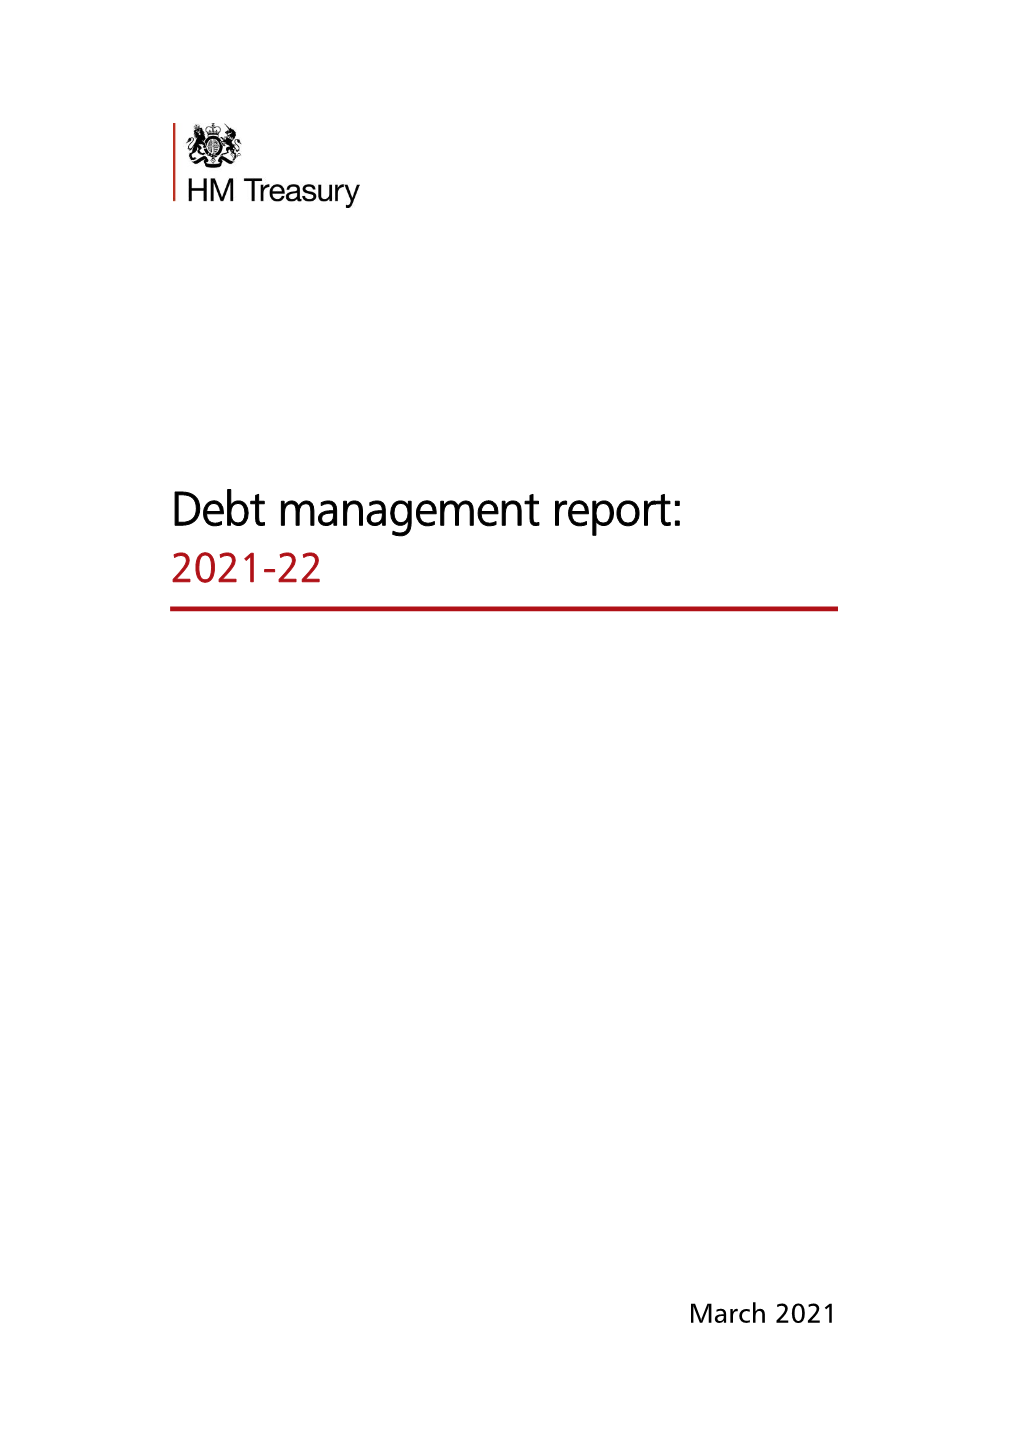 Debt Management Report 2021-22